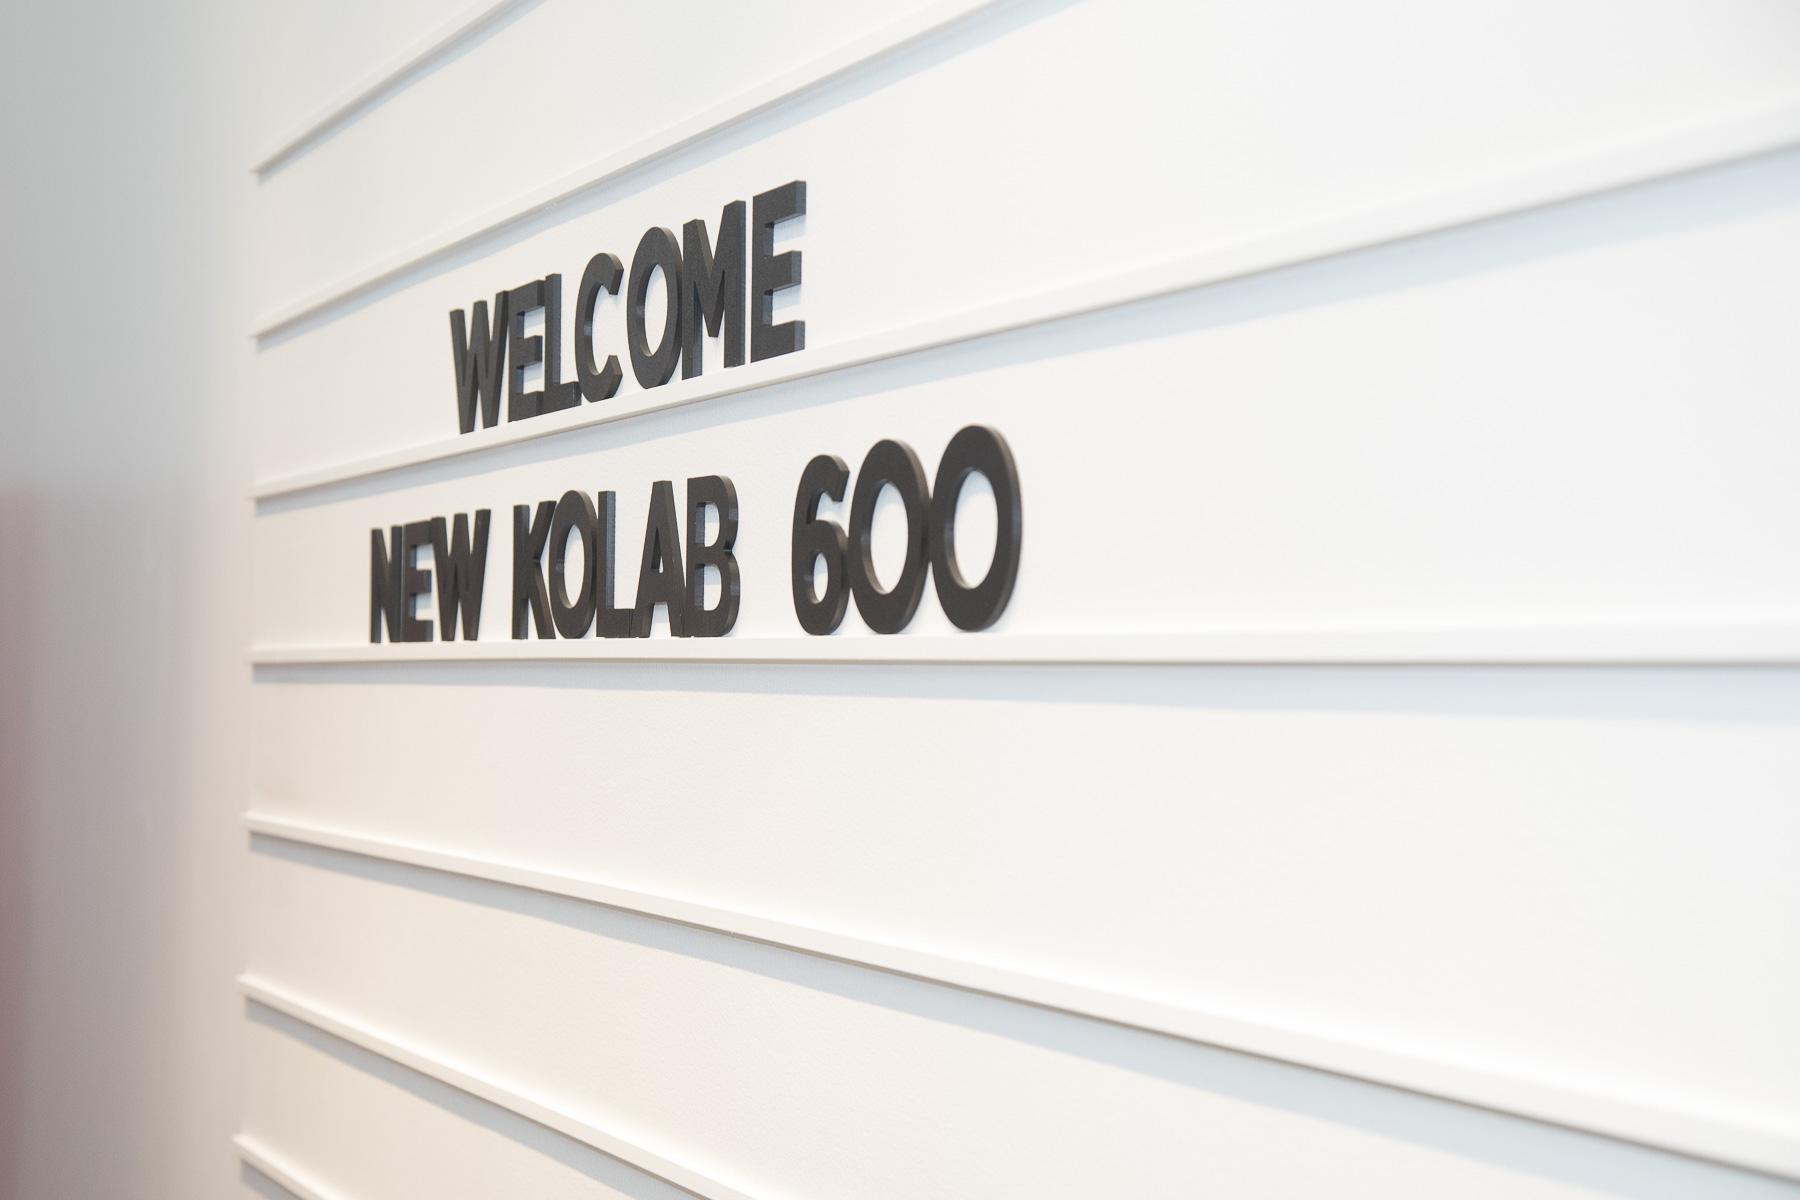 New KOlab Collaboration Center